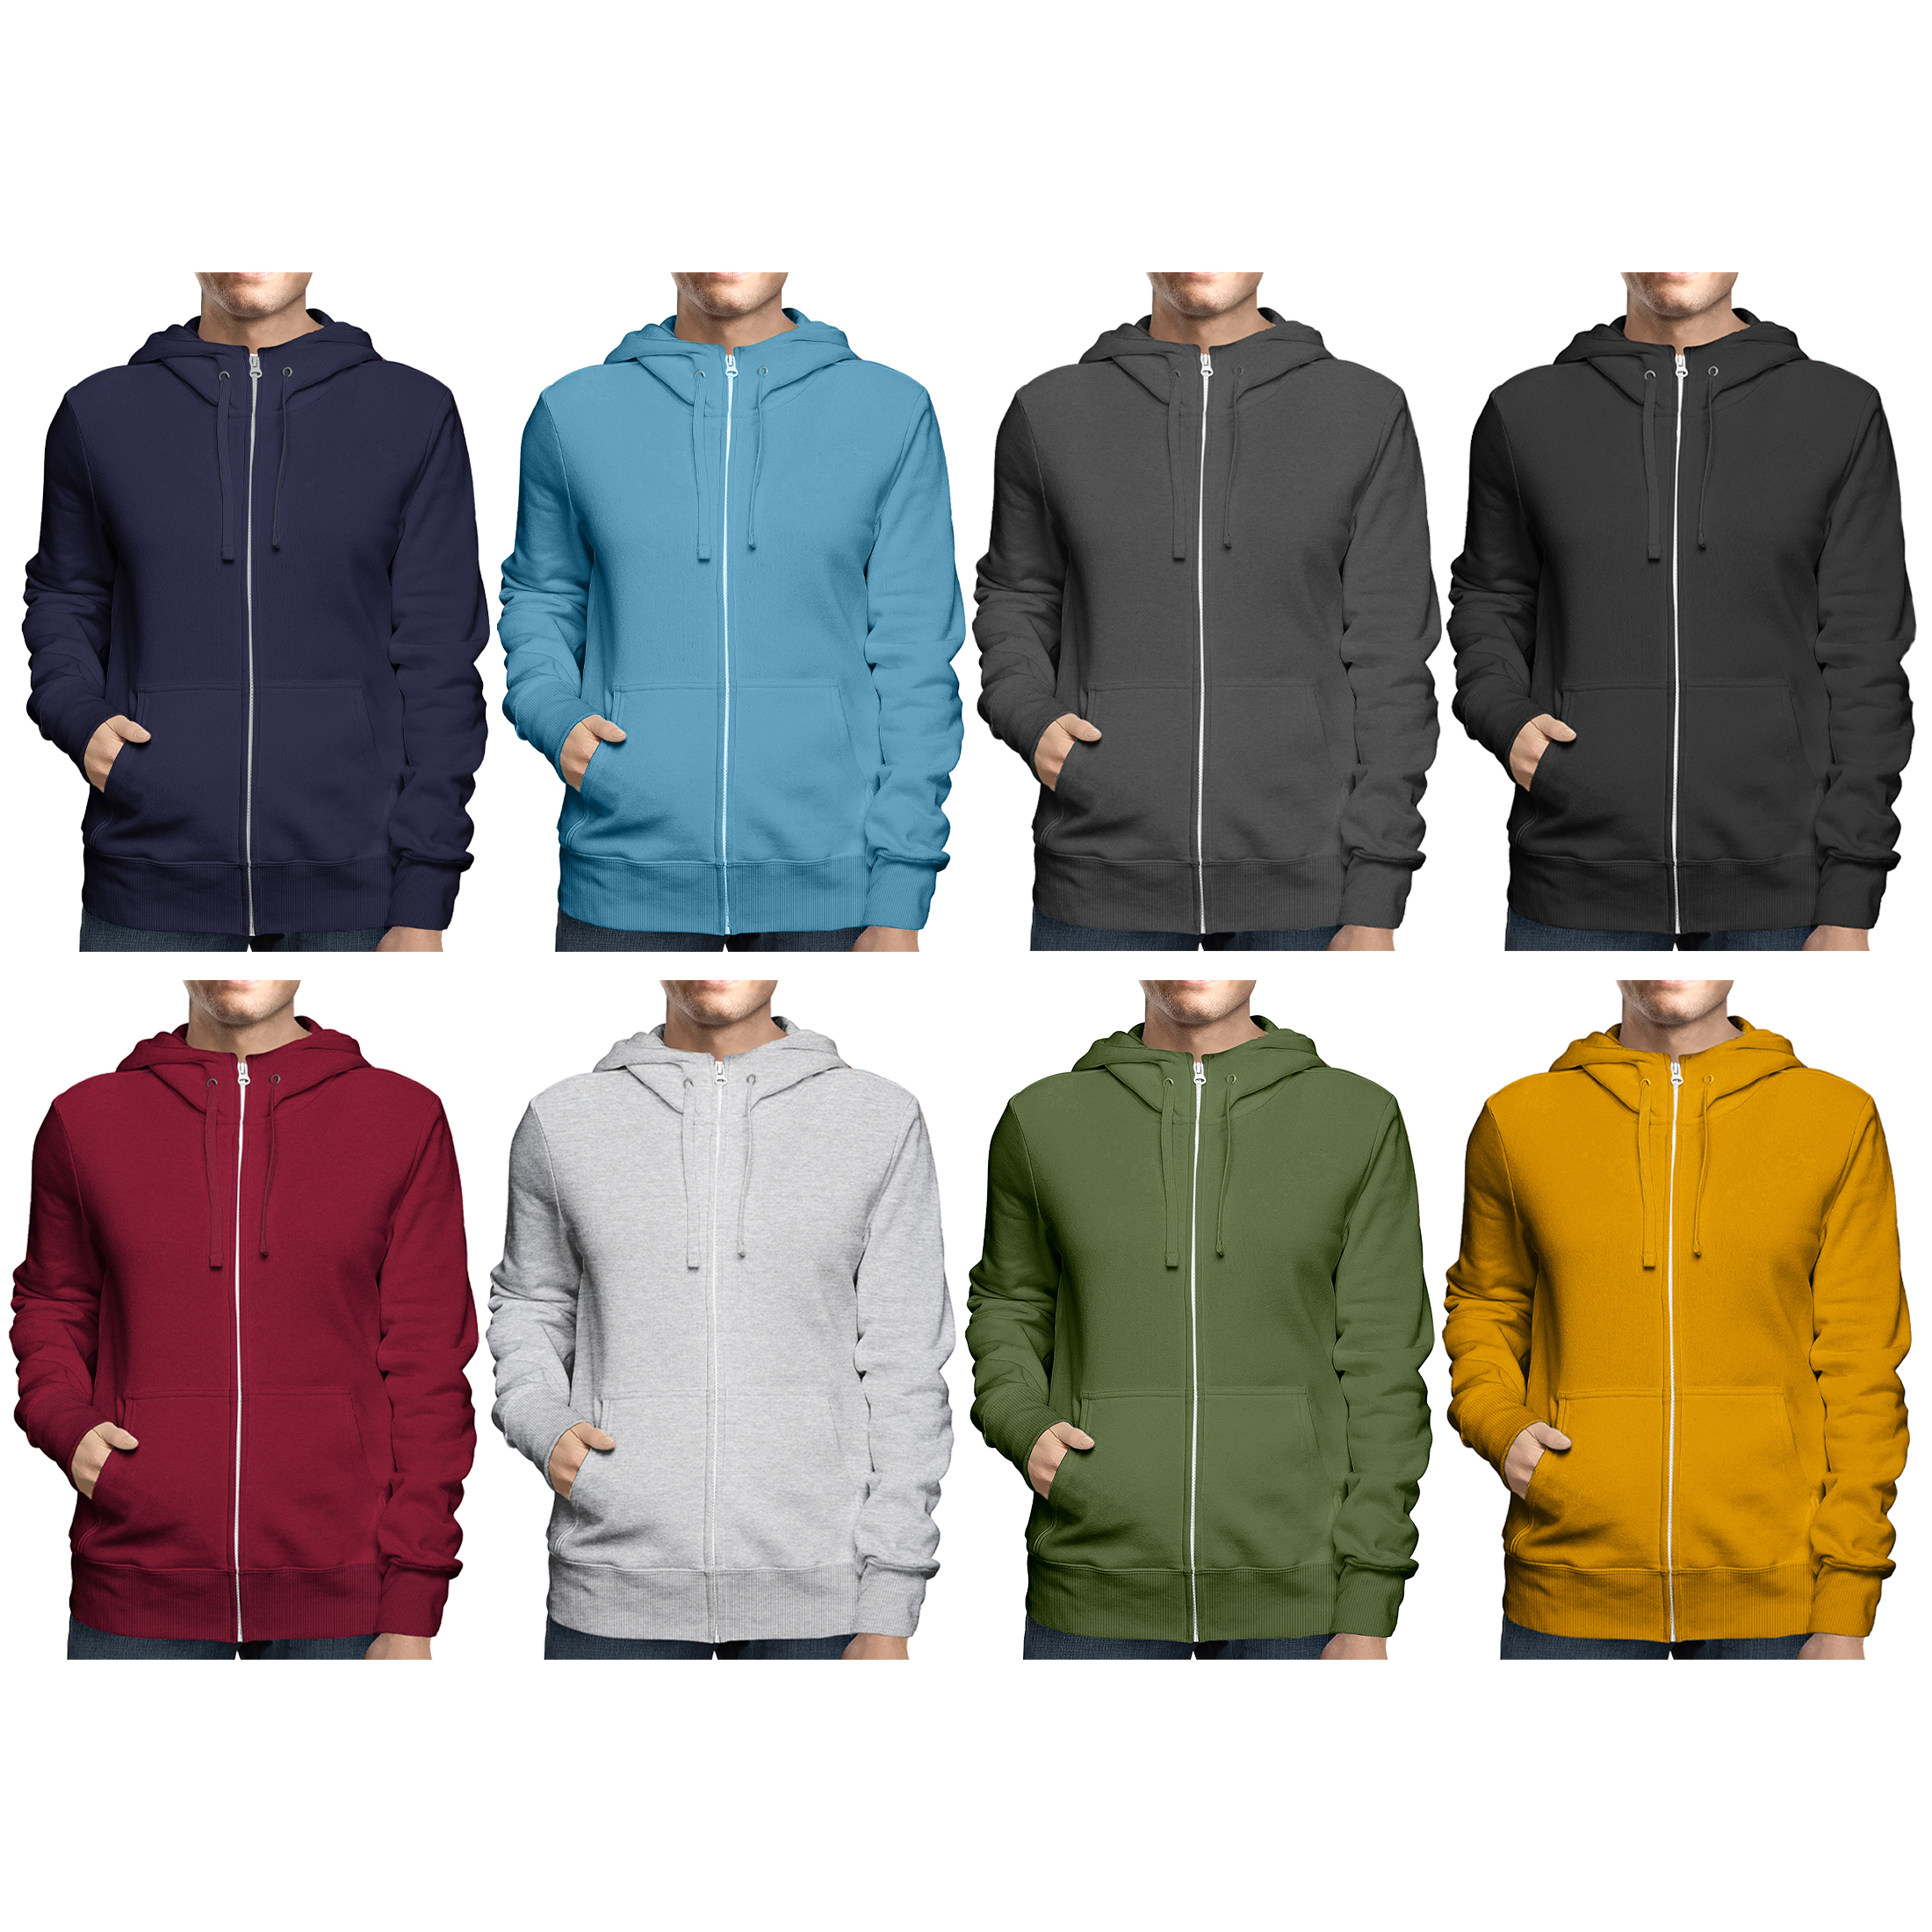 2-Pack: Men's Full Zip Up Fleece-Lined Hoodie Sweatshirt (Big & Tall Size Available) - Black & Burgundy, 3x-large